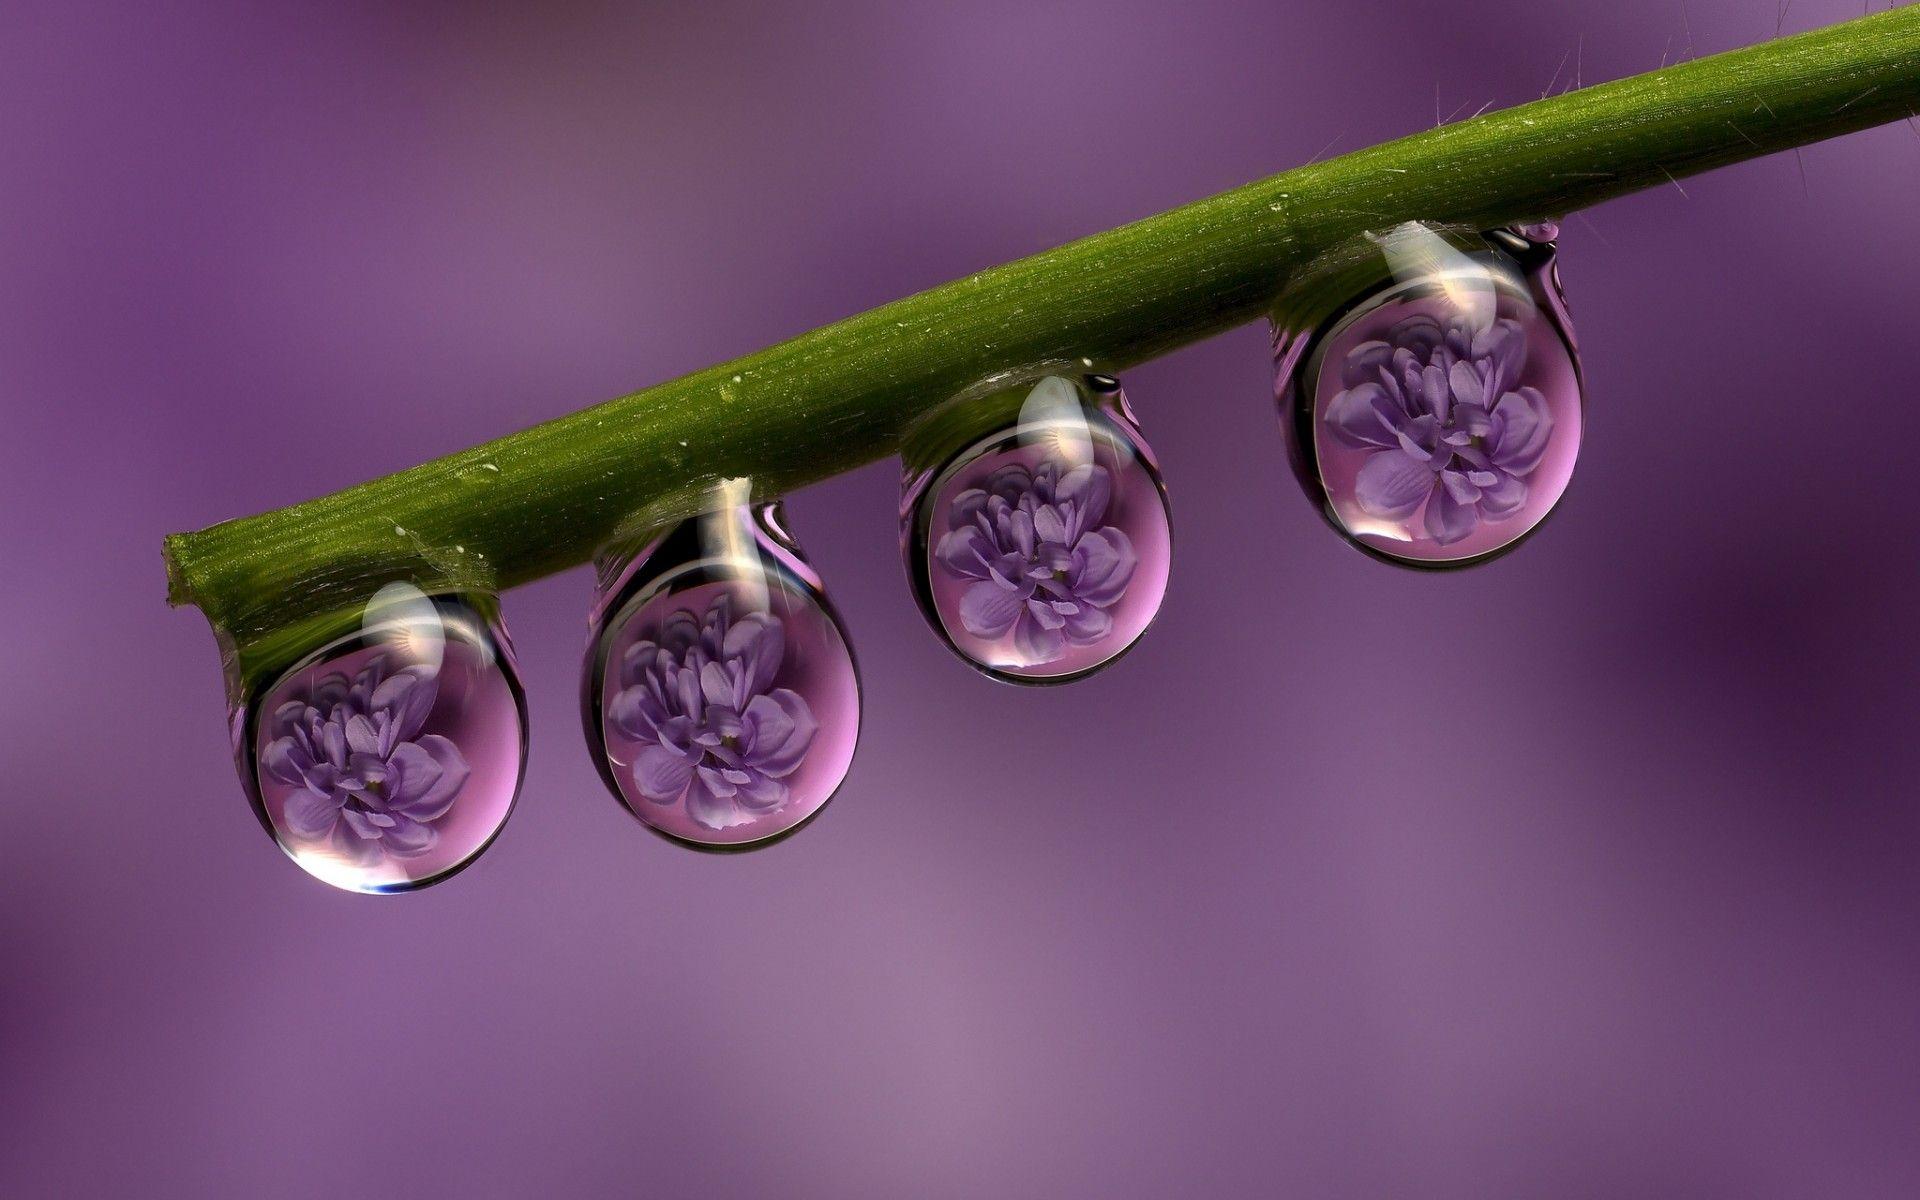 reflections in dew drops. stem drops dew flowers reflection